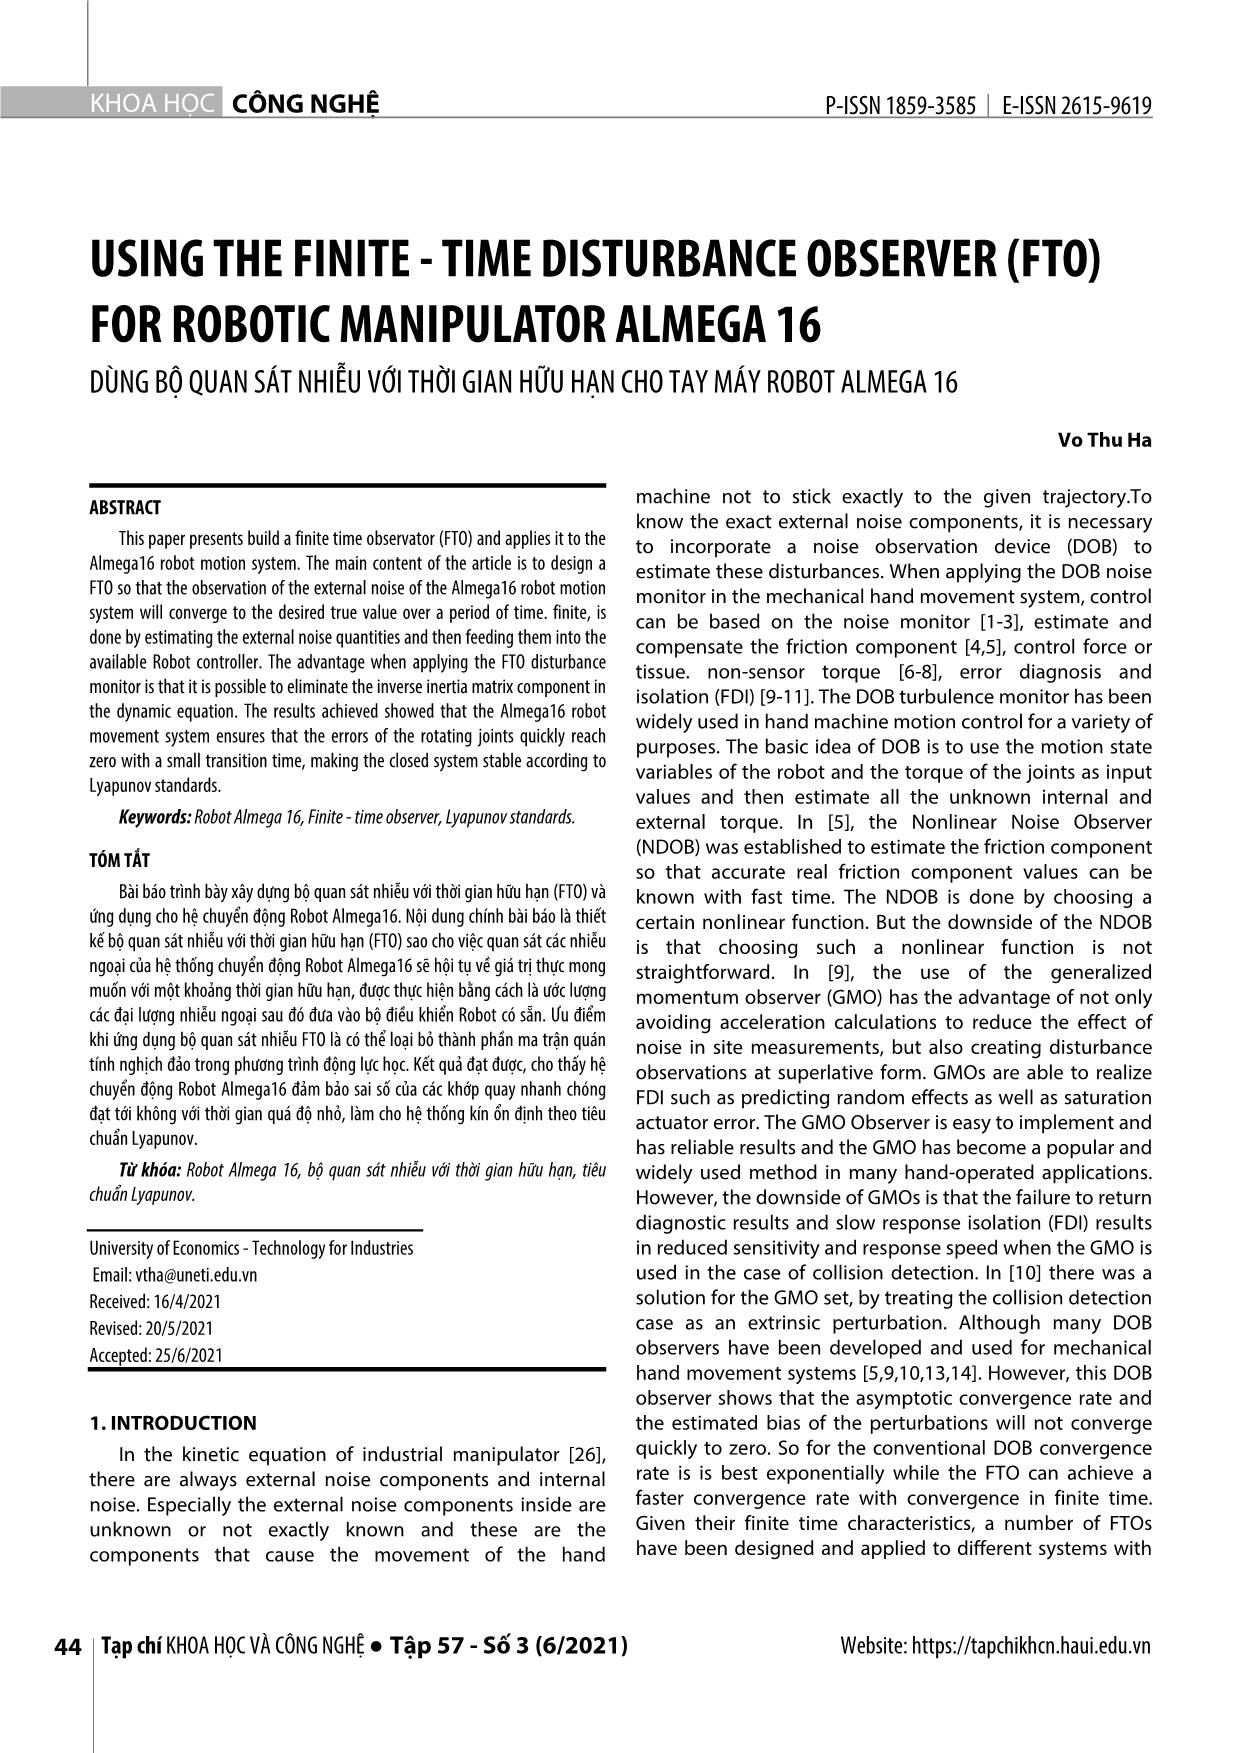 Using the finite - time disturbance observer (FTO) for robotic manipulator Almega 16 trang 1